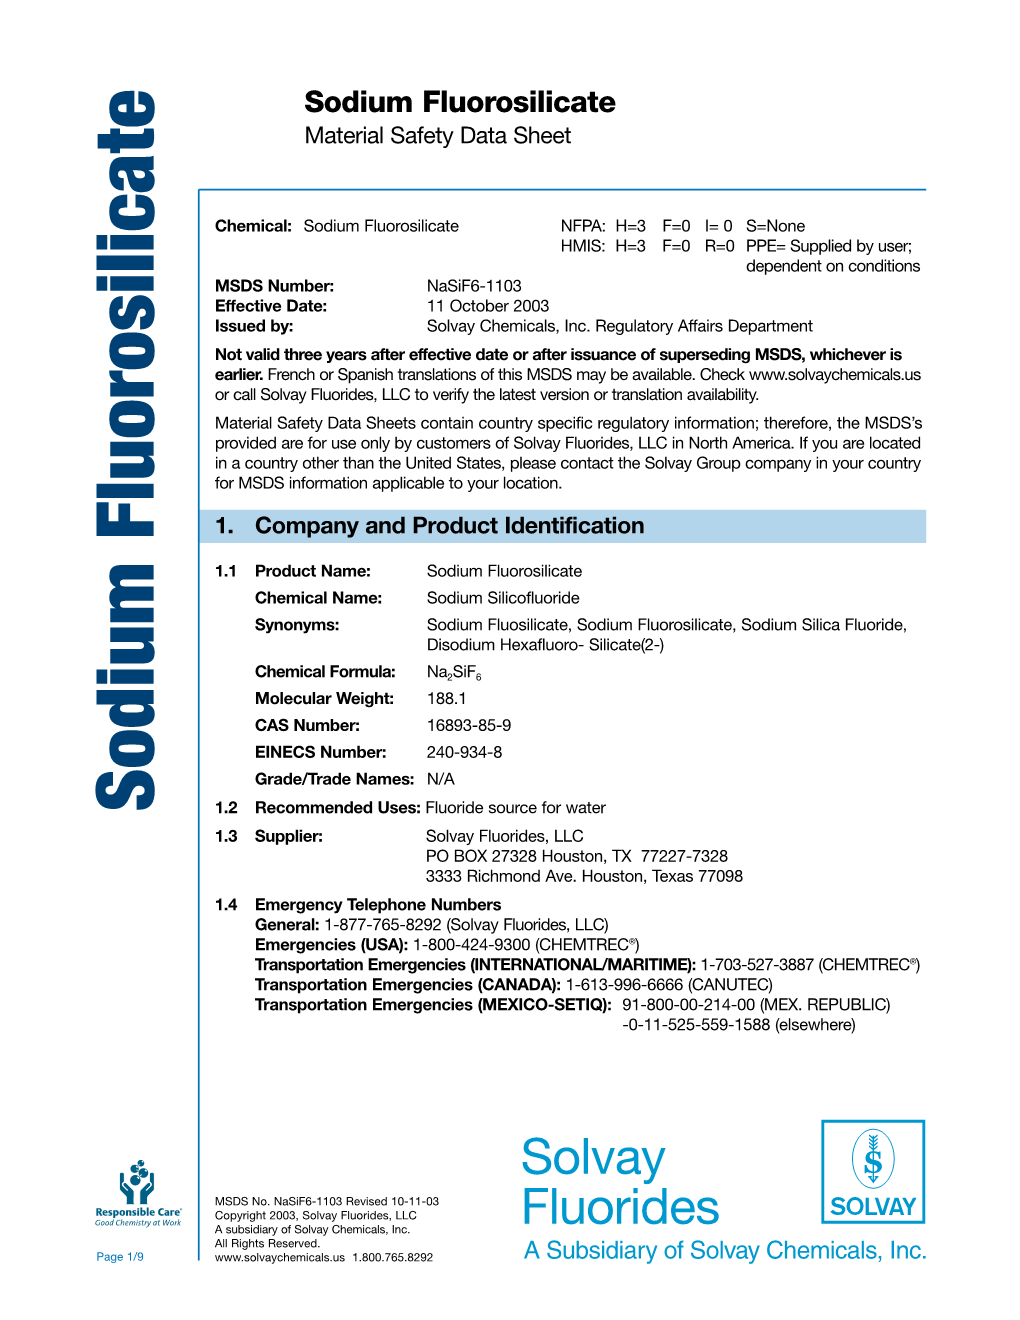 Sodium Fluorosilicate Material Safety Data Sheet